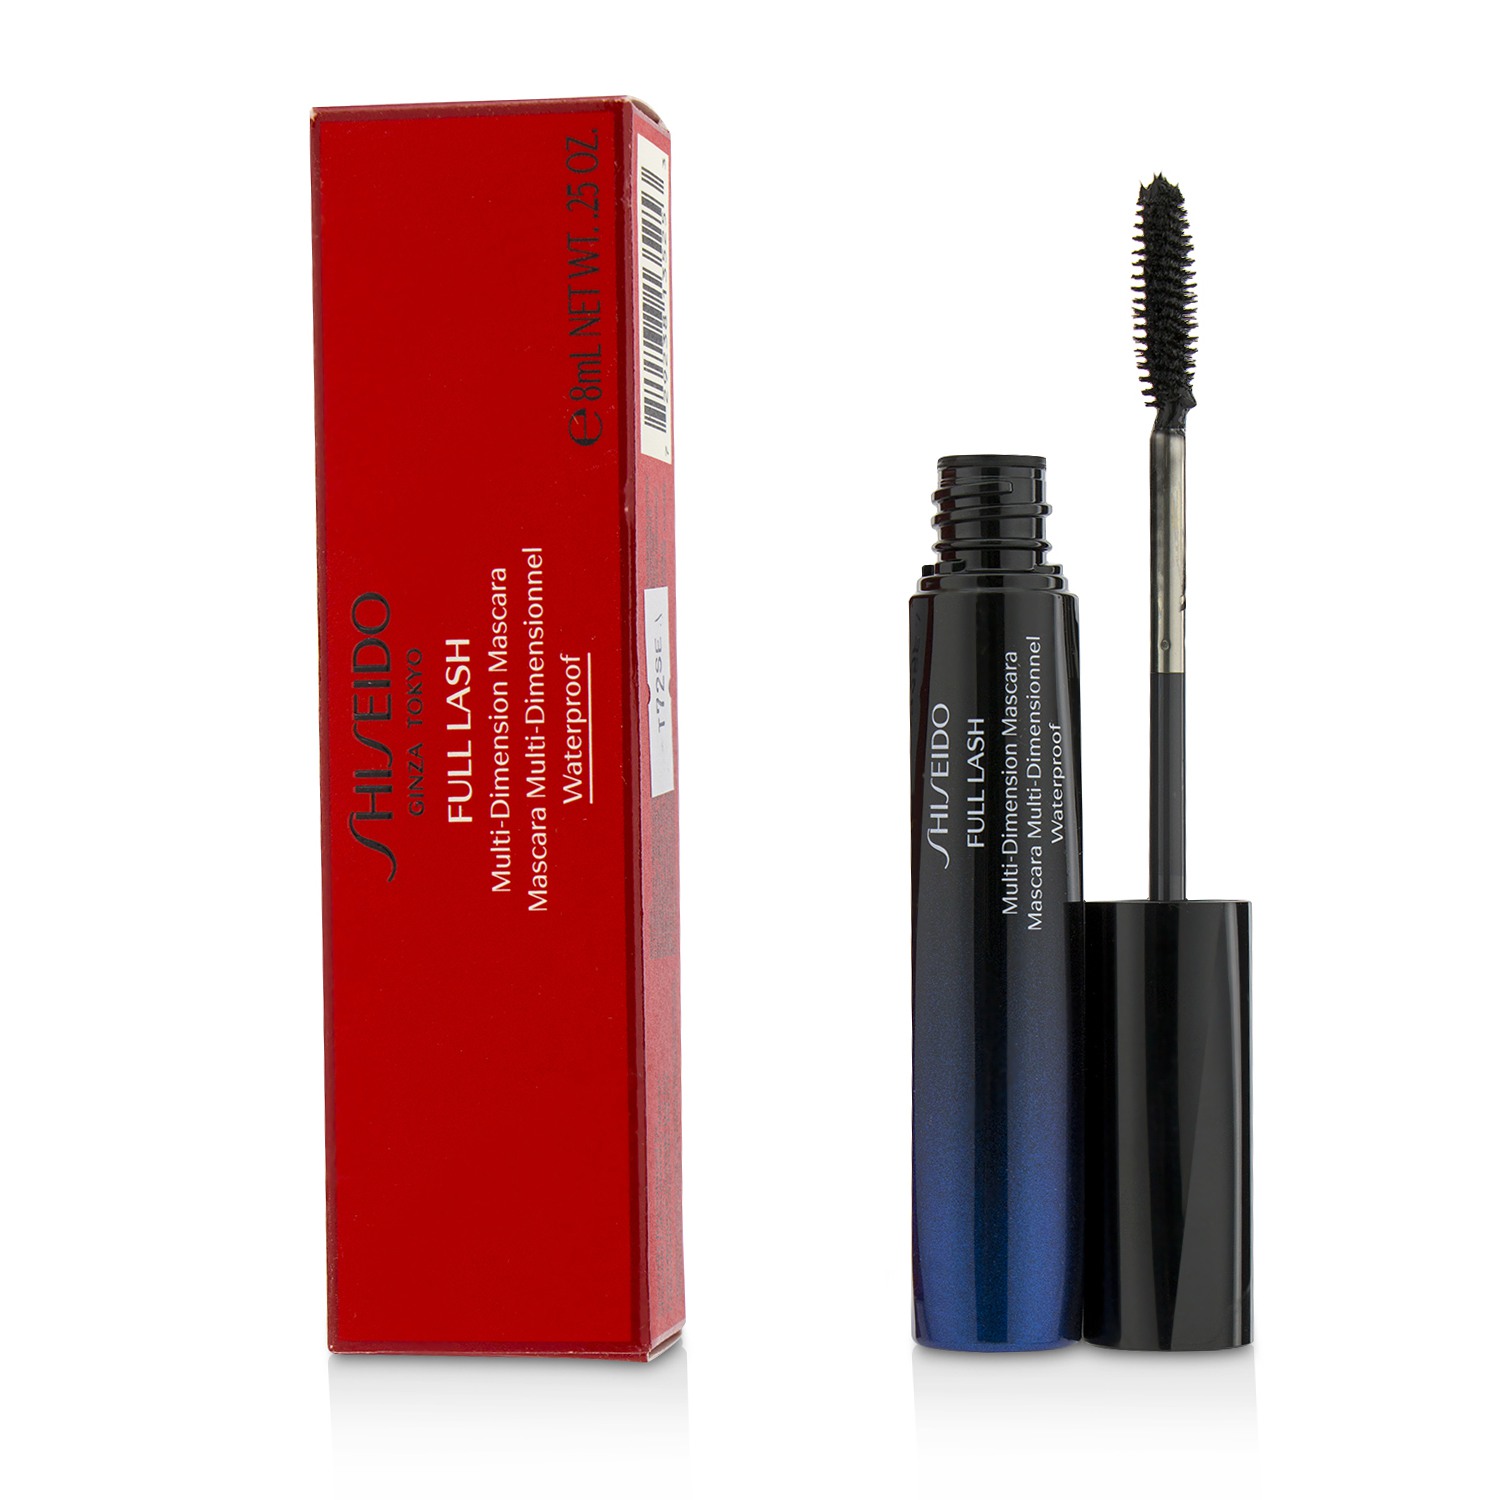 Full Lash Multi Dimension Mascara Waterproof - # BK901 Black Shiseido Image